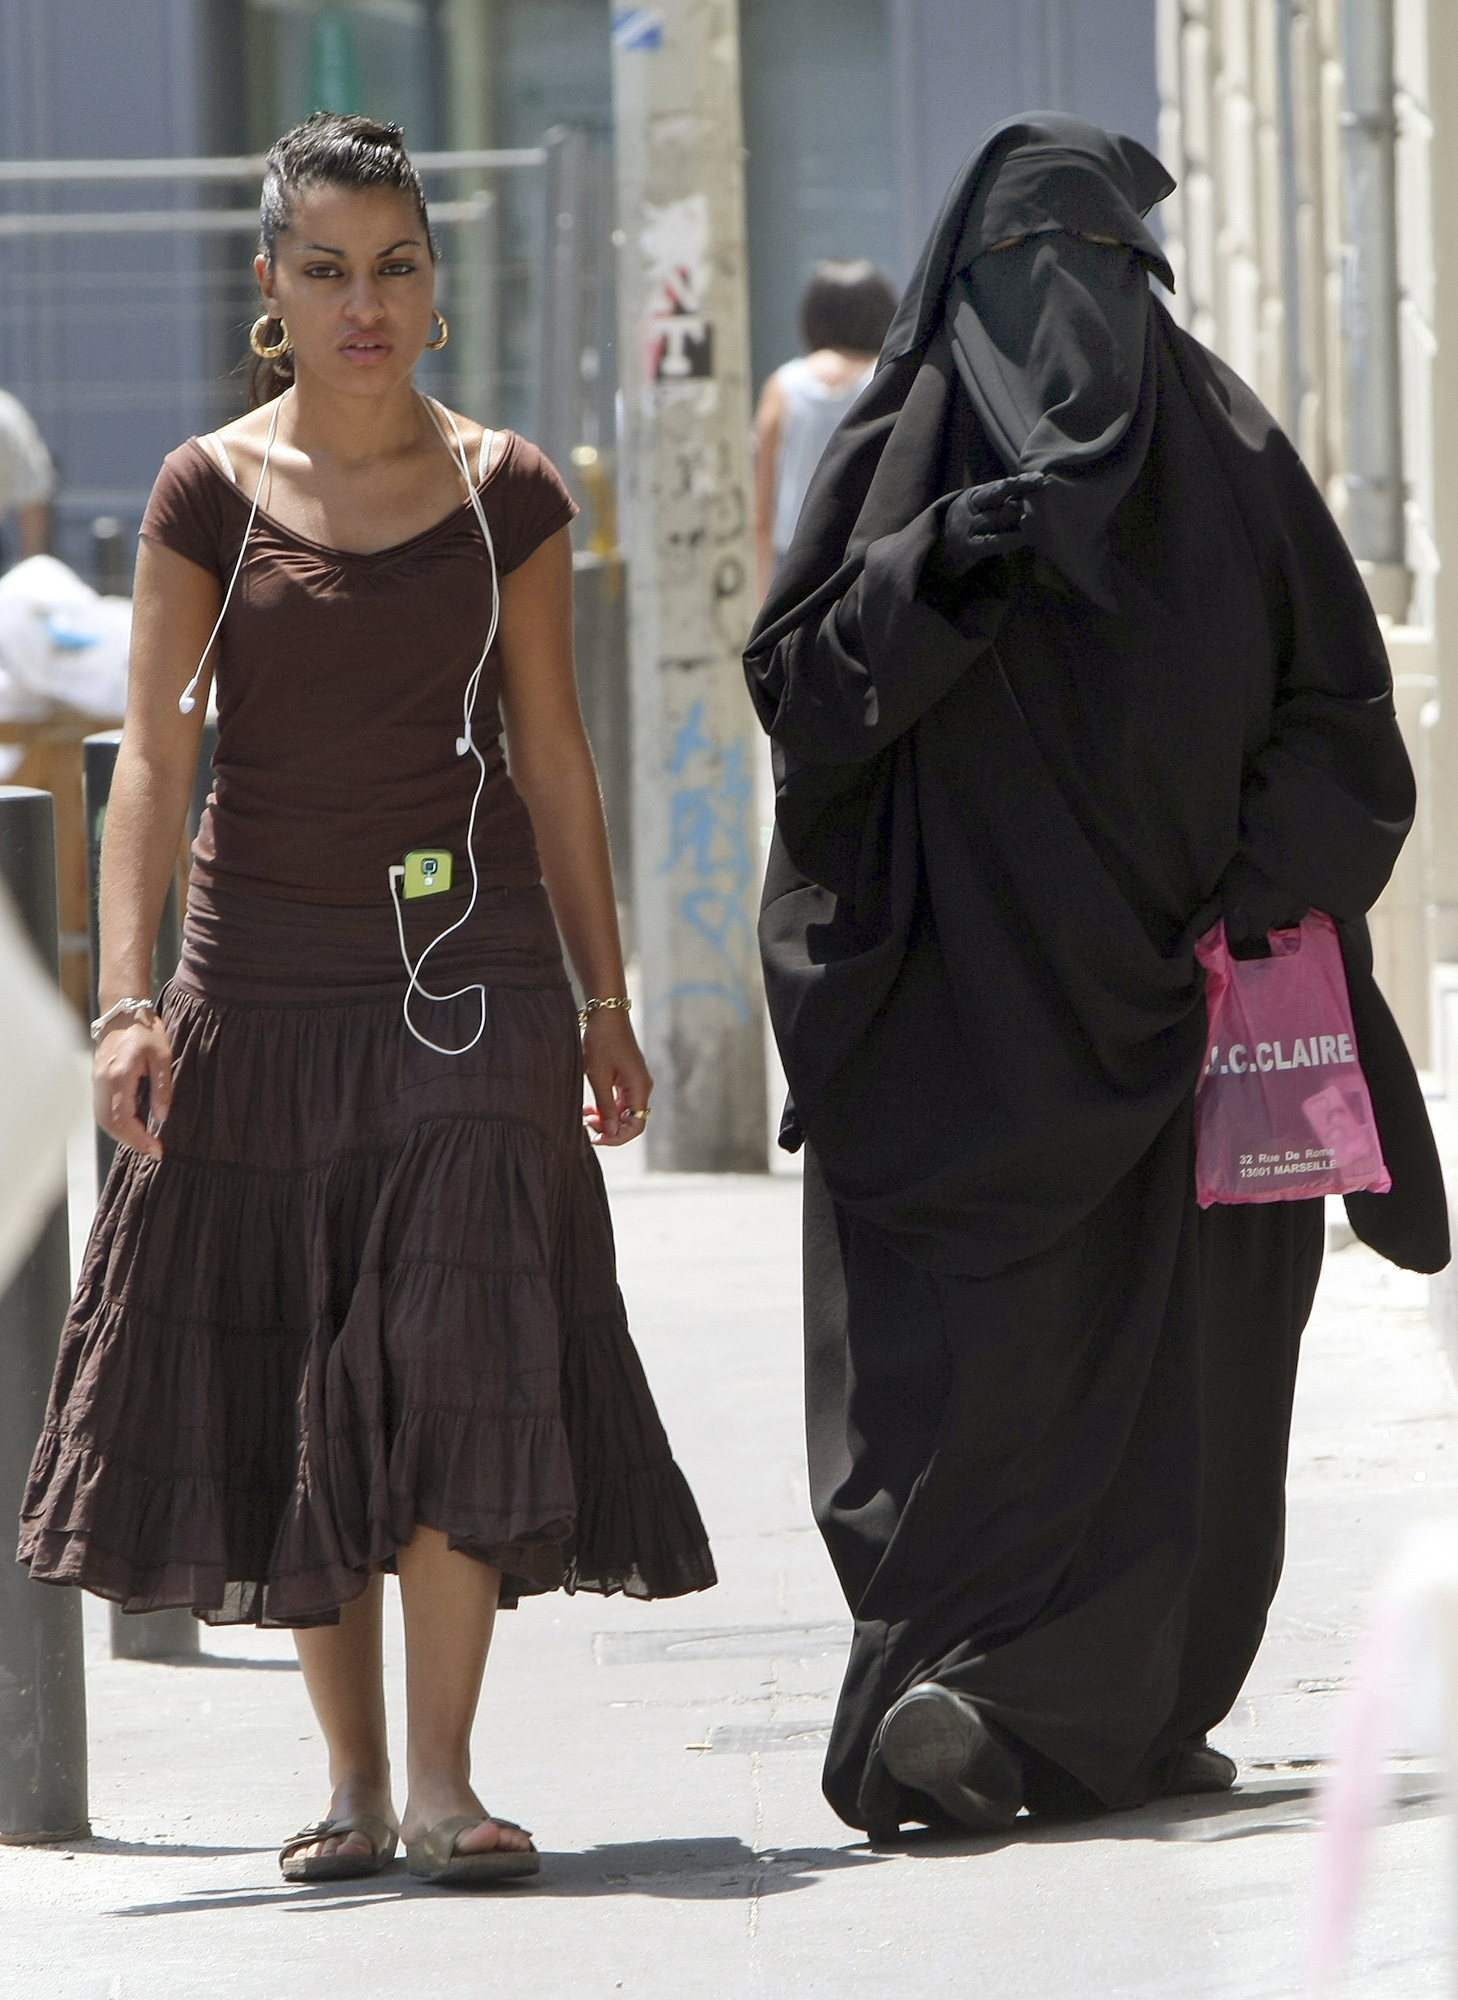 Islamofobi, Forbud, Burka, Muslimer, Niqab, Burkaförbud